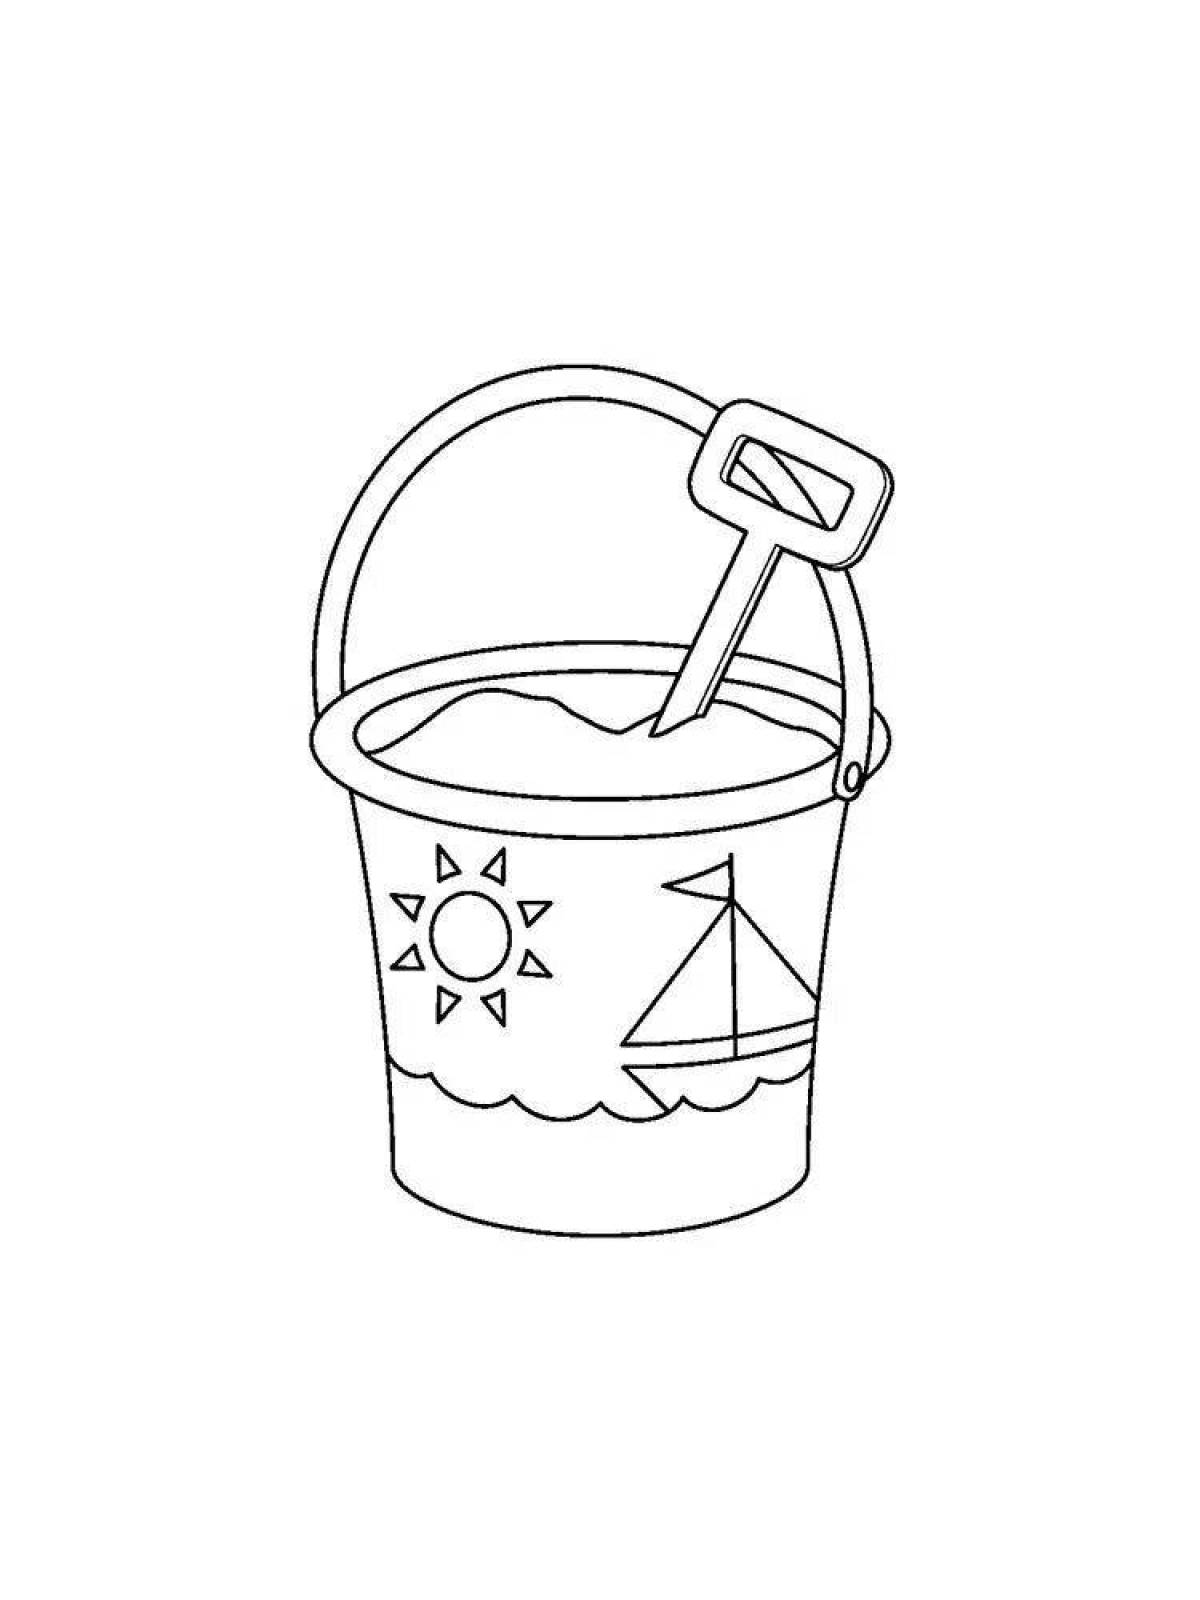 Sparkly bucket coloring page